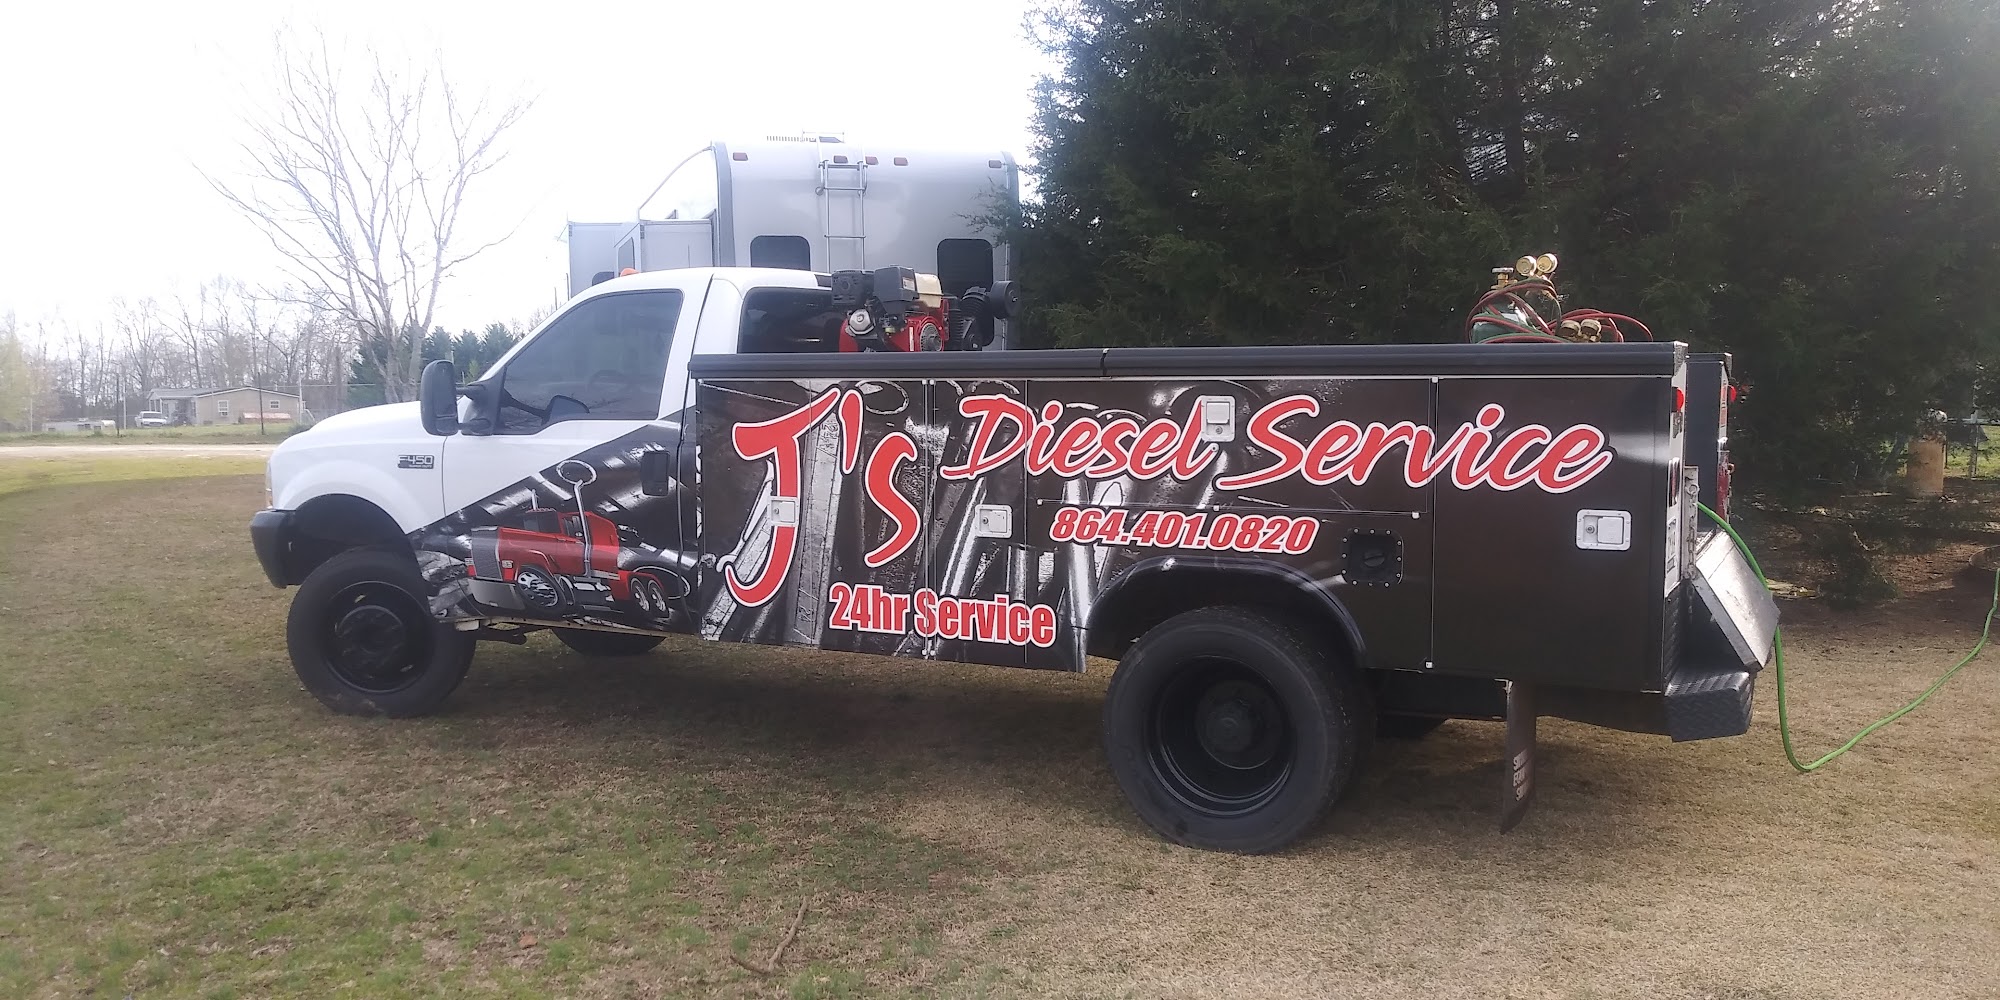 J's Diesel Service 24 Hour Truck and Trailer repairs